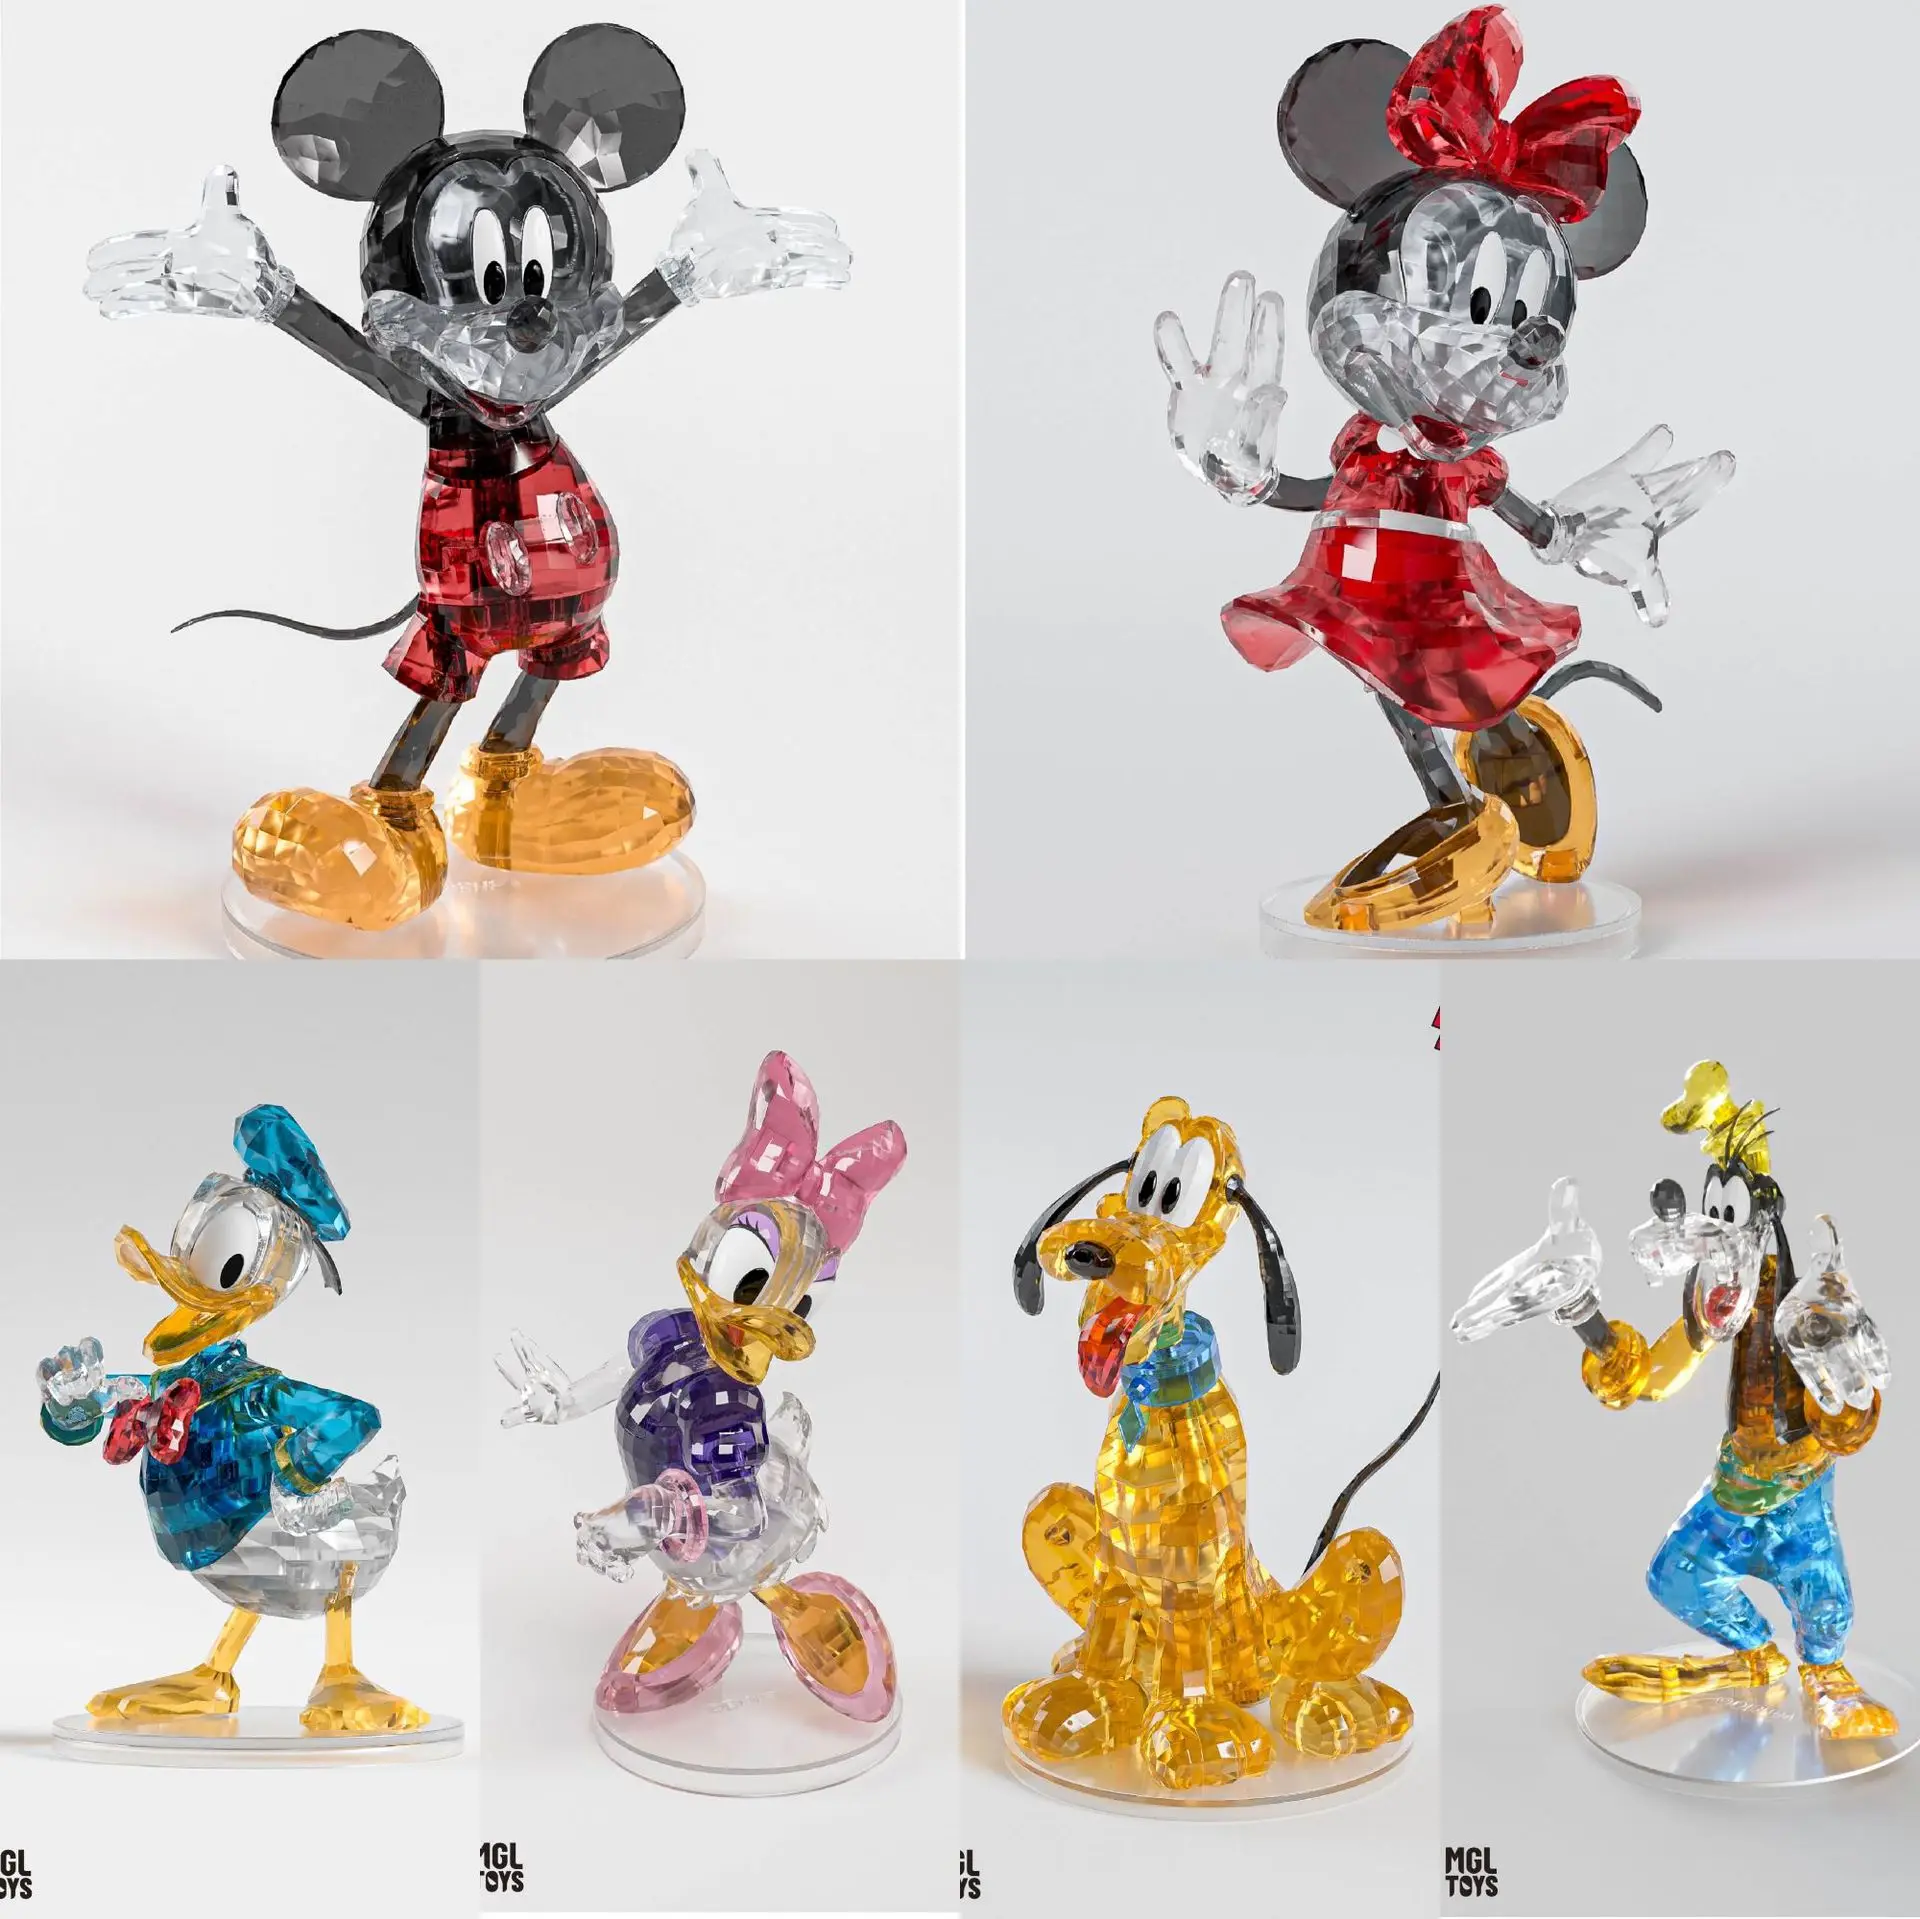 

MGL Original Disney Mickey Mouse Donald Duck Minnie Goofy Pluto Daisy crystal Block Figure Collection Model Toys